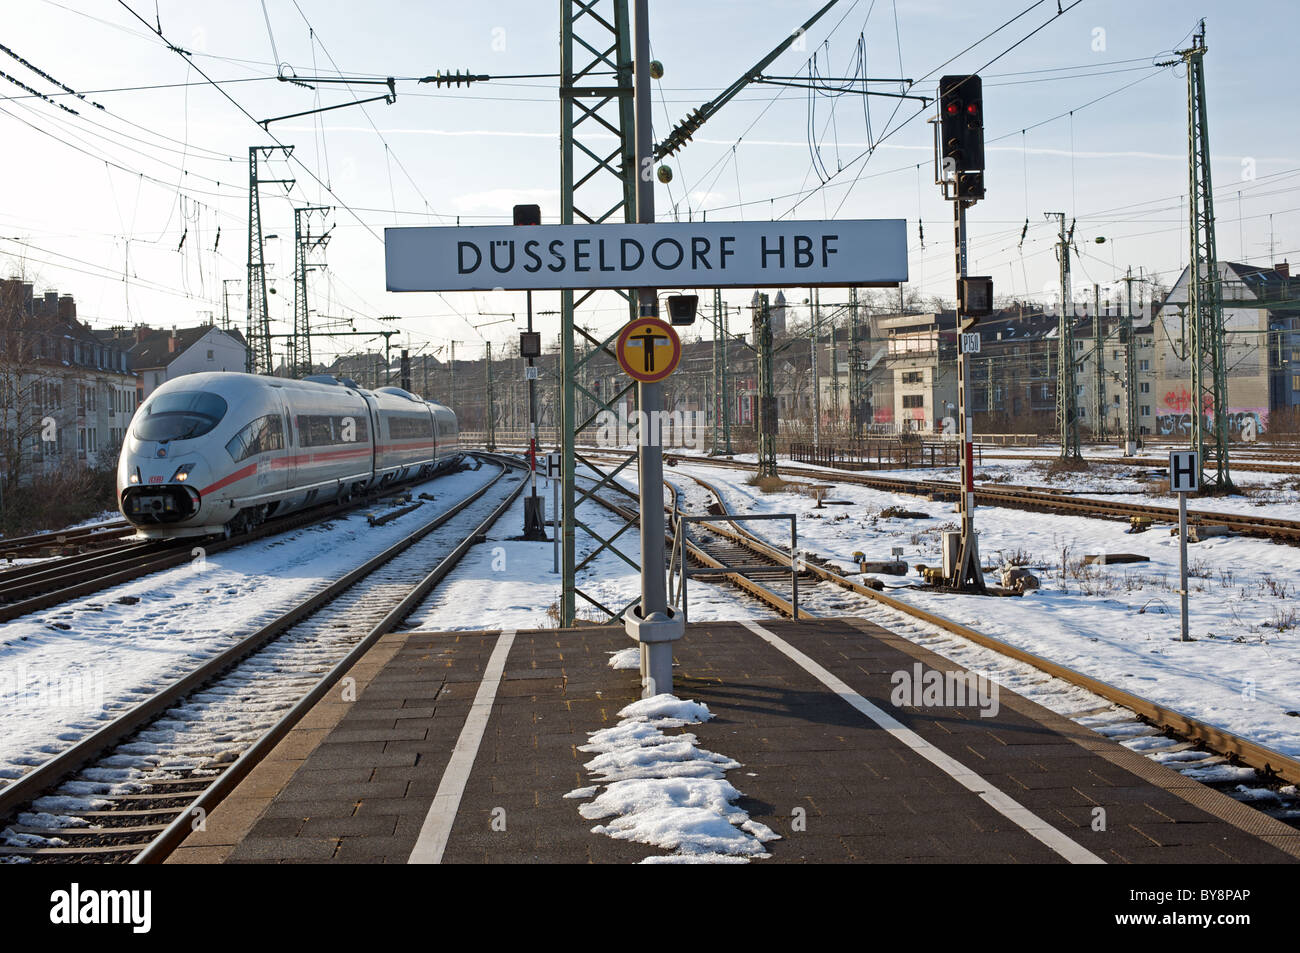 German Railways Intercity Express (ICE) Dusseldorf HBF (main railway station), Germany. Stock Photo